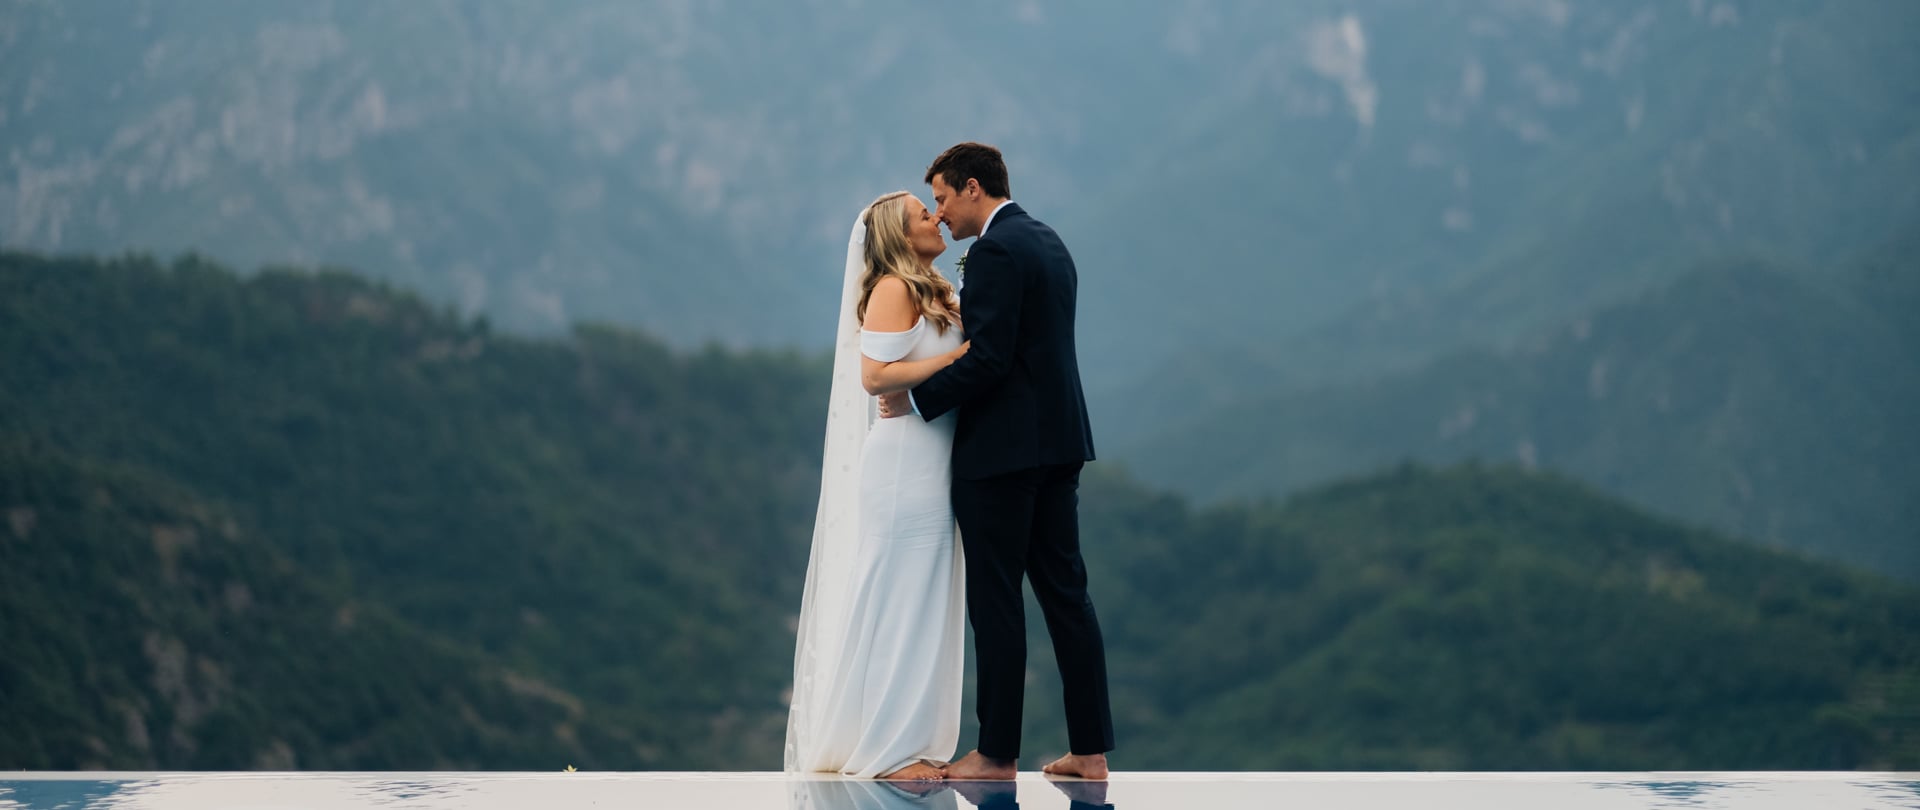 Kate & Barry Wedding Video Filmed atAmalfi coast,Europe